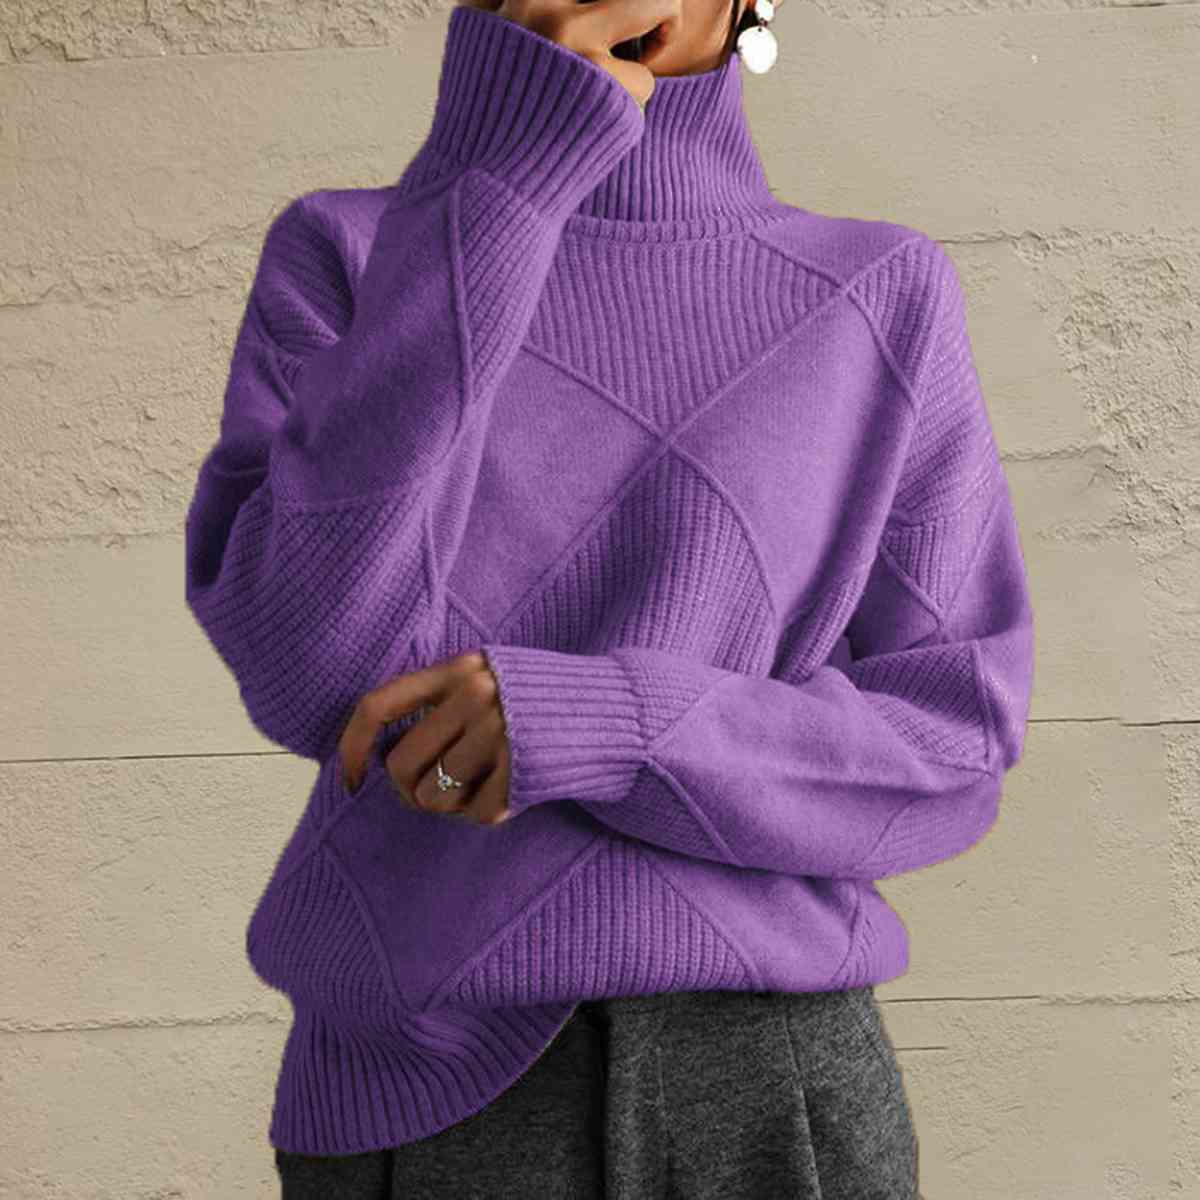 Sample Sale Geometric Purple Sweater size Small